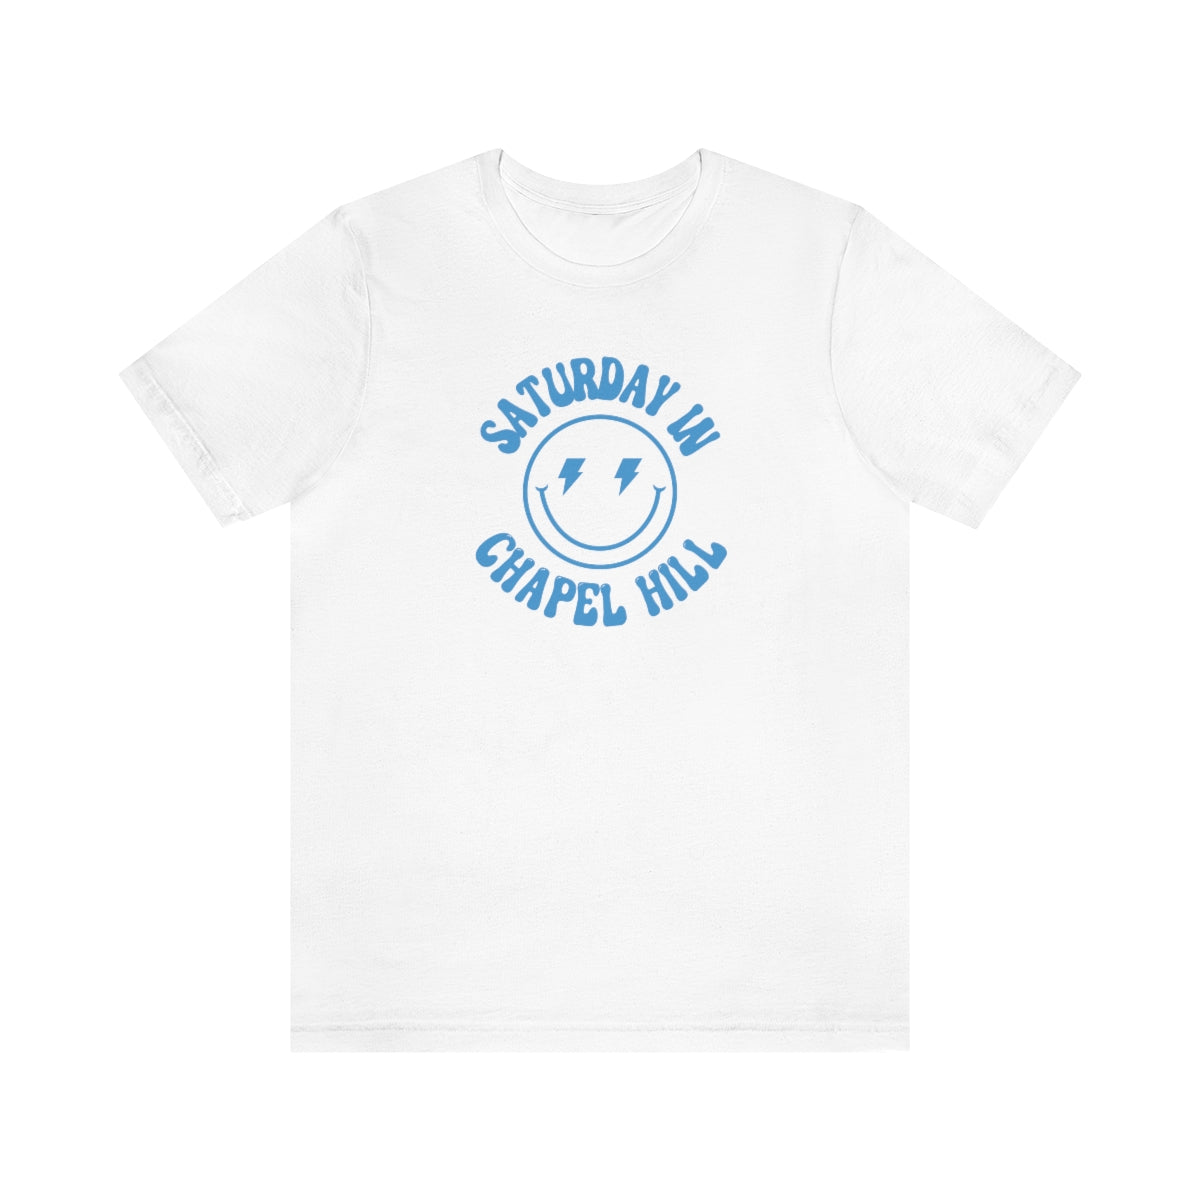 Smiley Chapel Short Sleeve Tee - GG